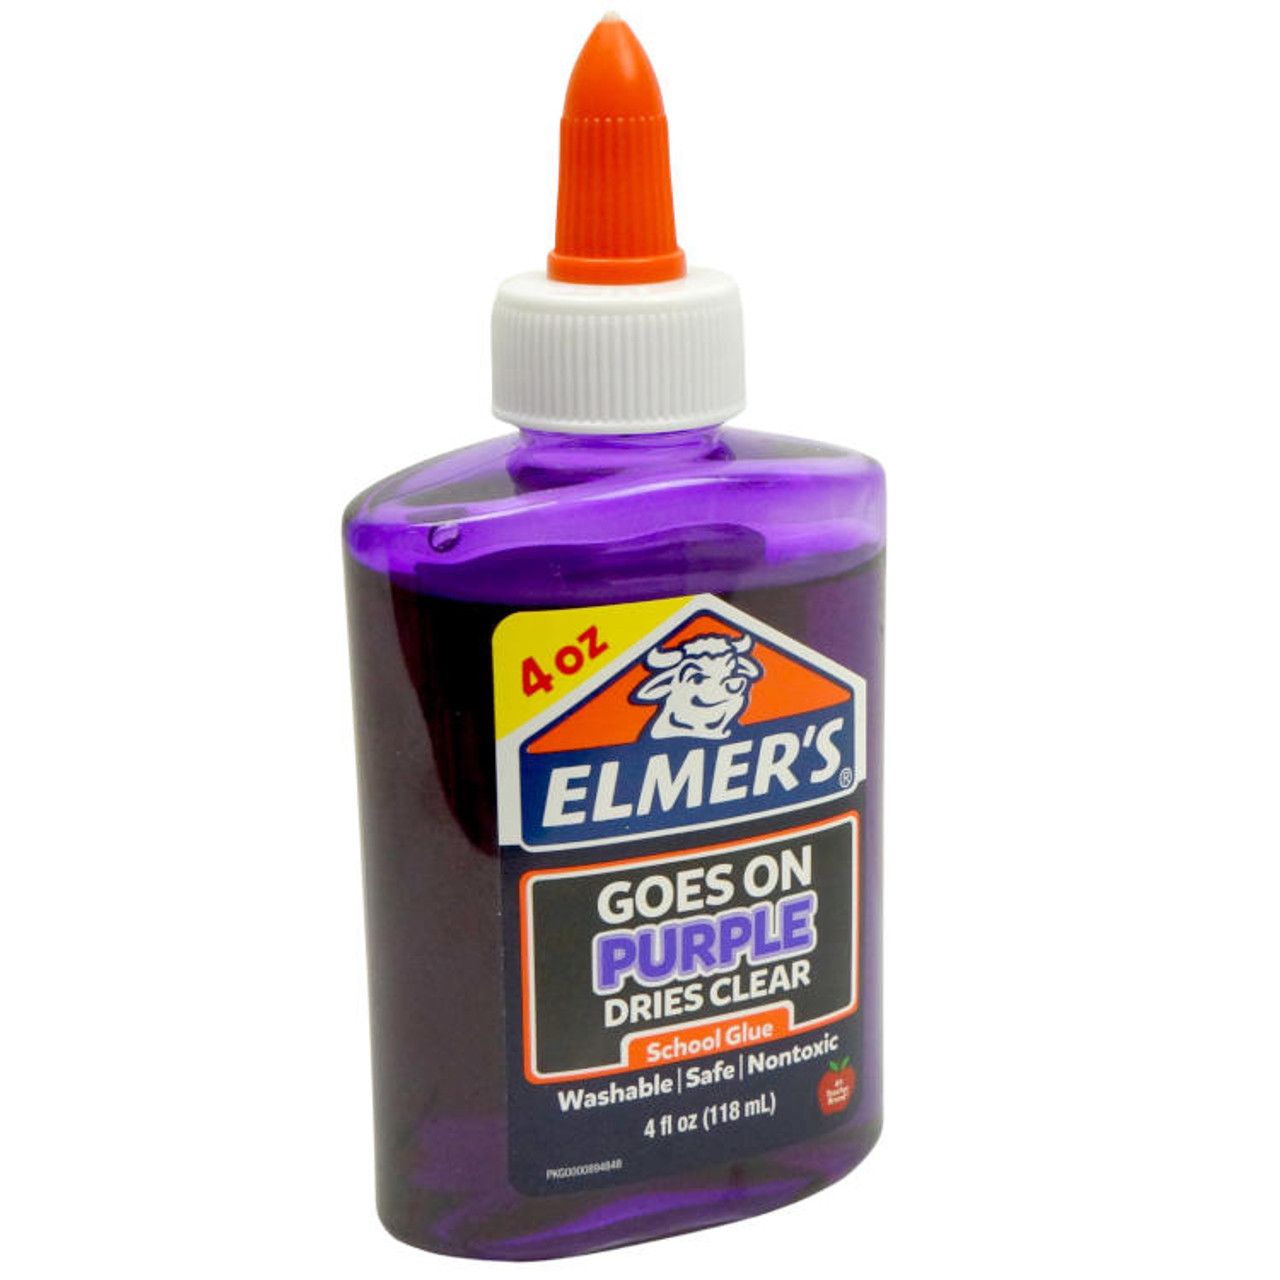 Translucent Washable Glue - Best Glue To Make Slime